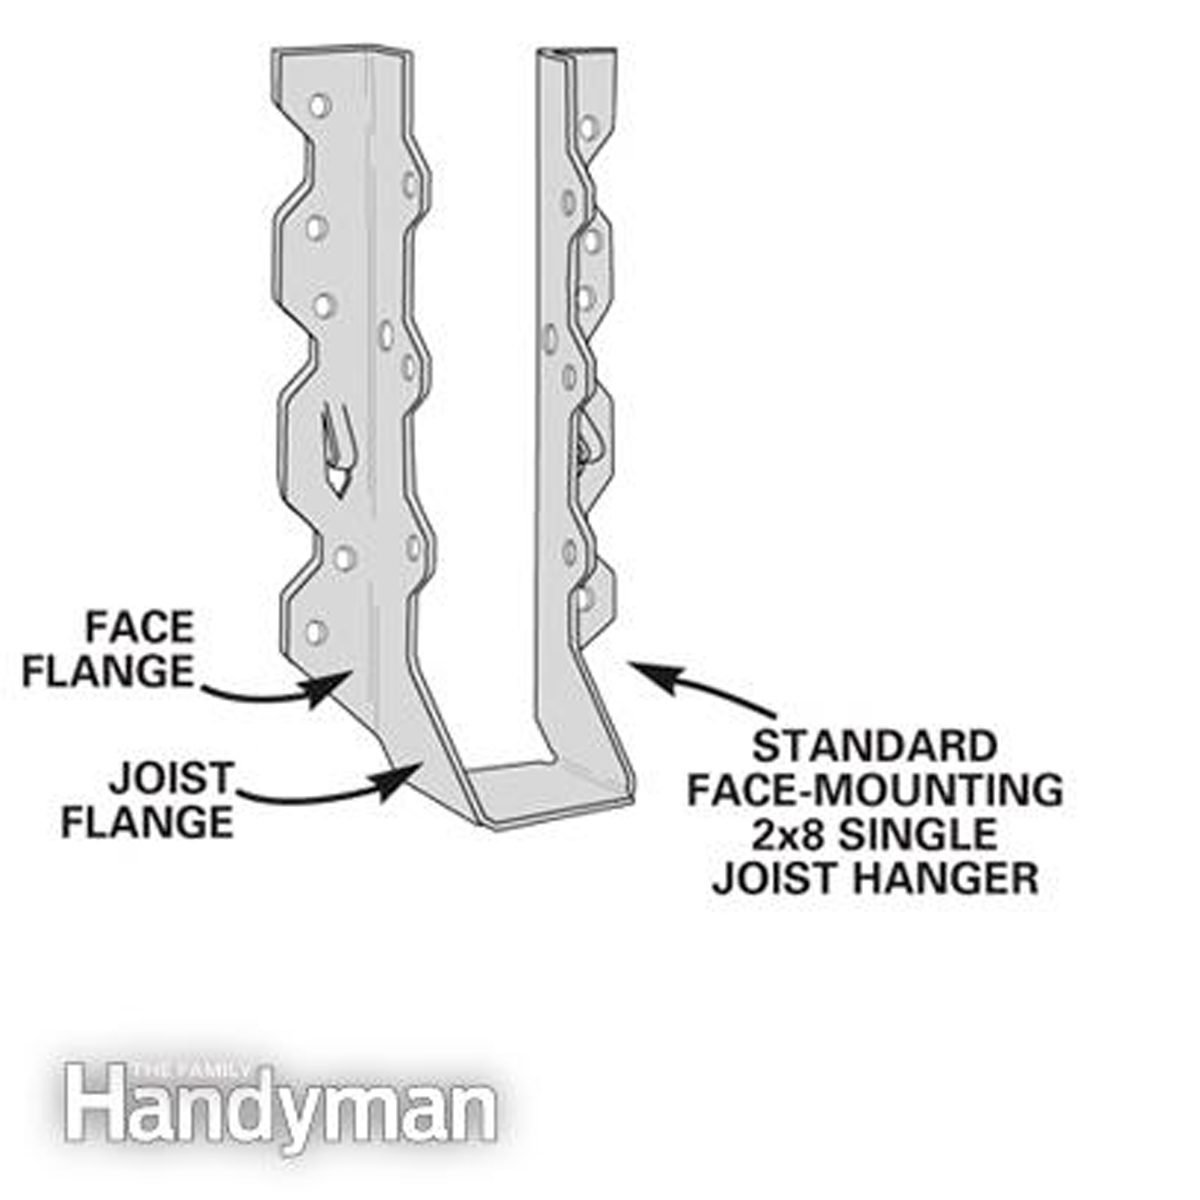 How To Install Joist Hangers Family Handyman